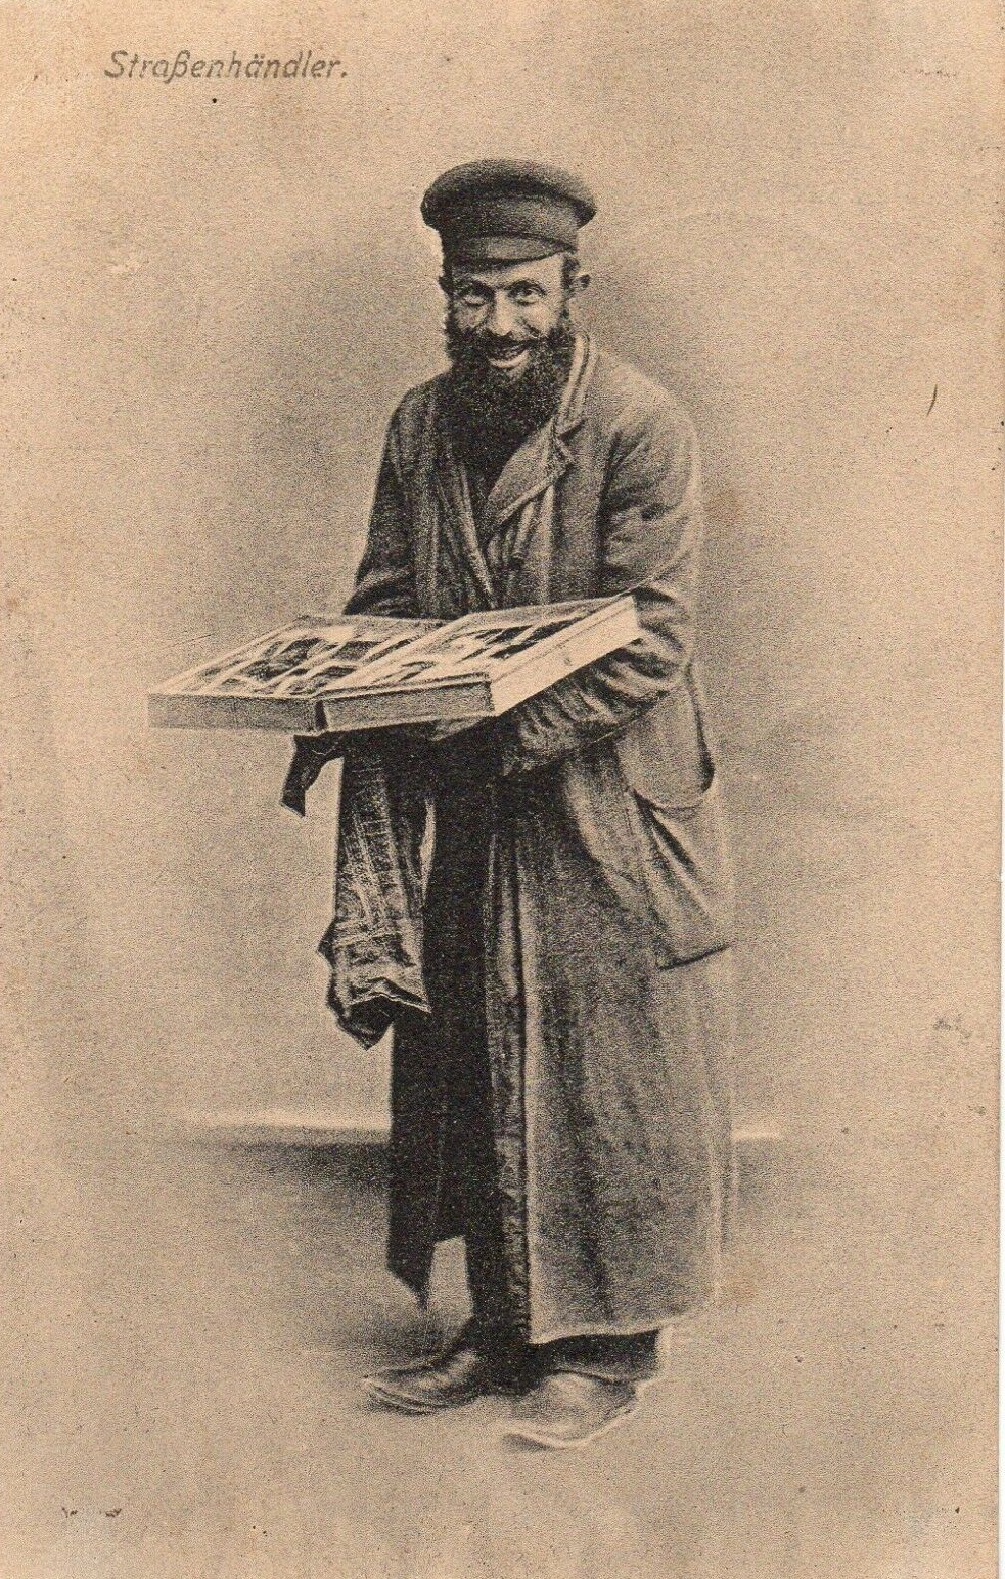 Germany 191x Jewish Man street vendor